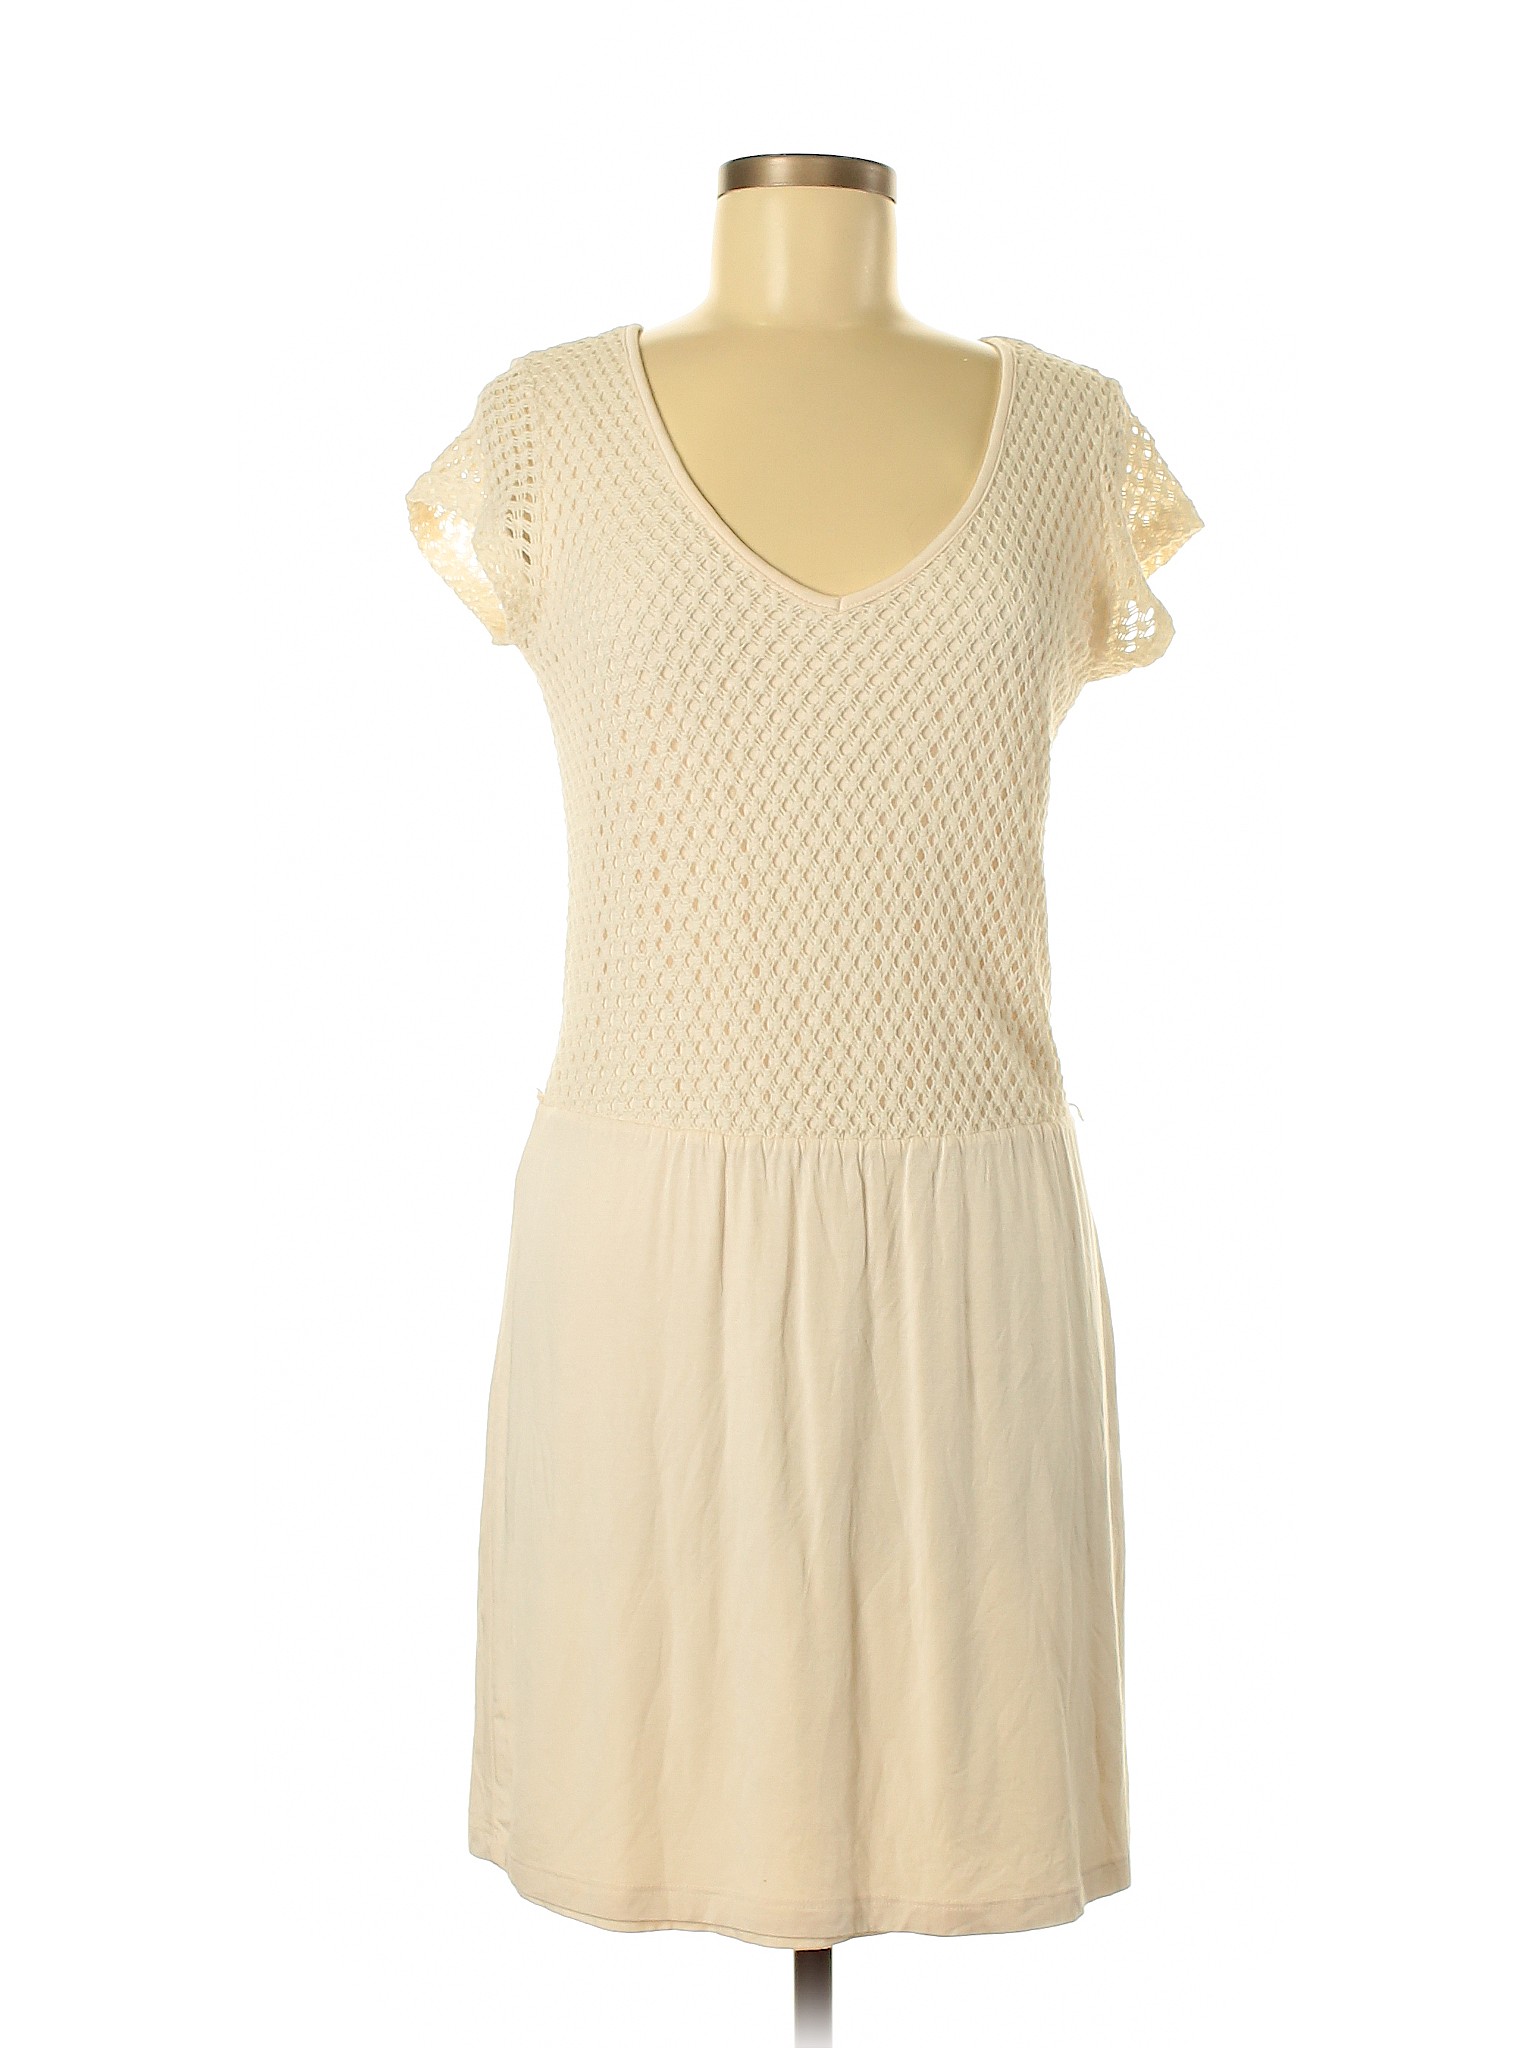 Tart Women Ivory Casual Dress M | eBay